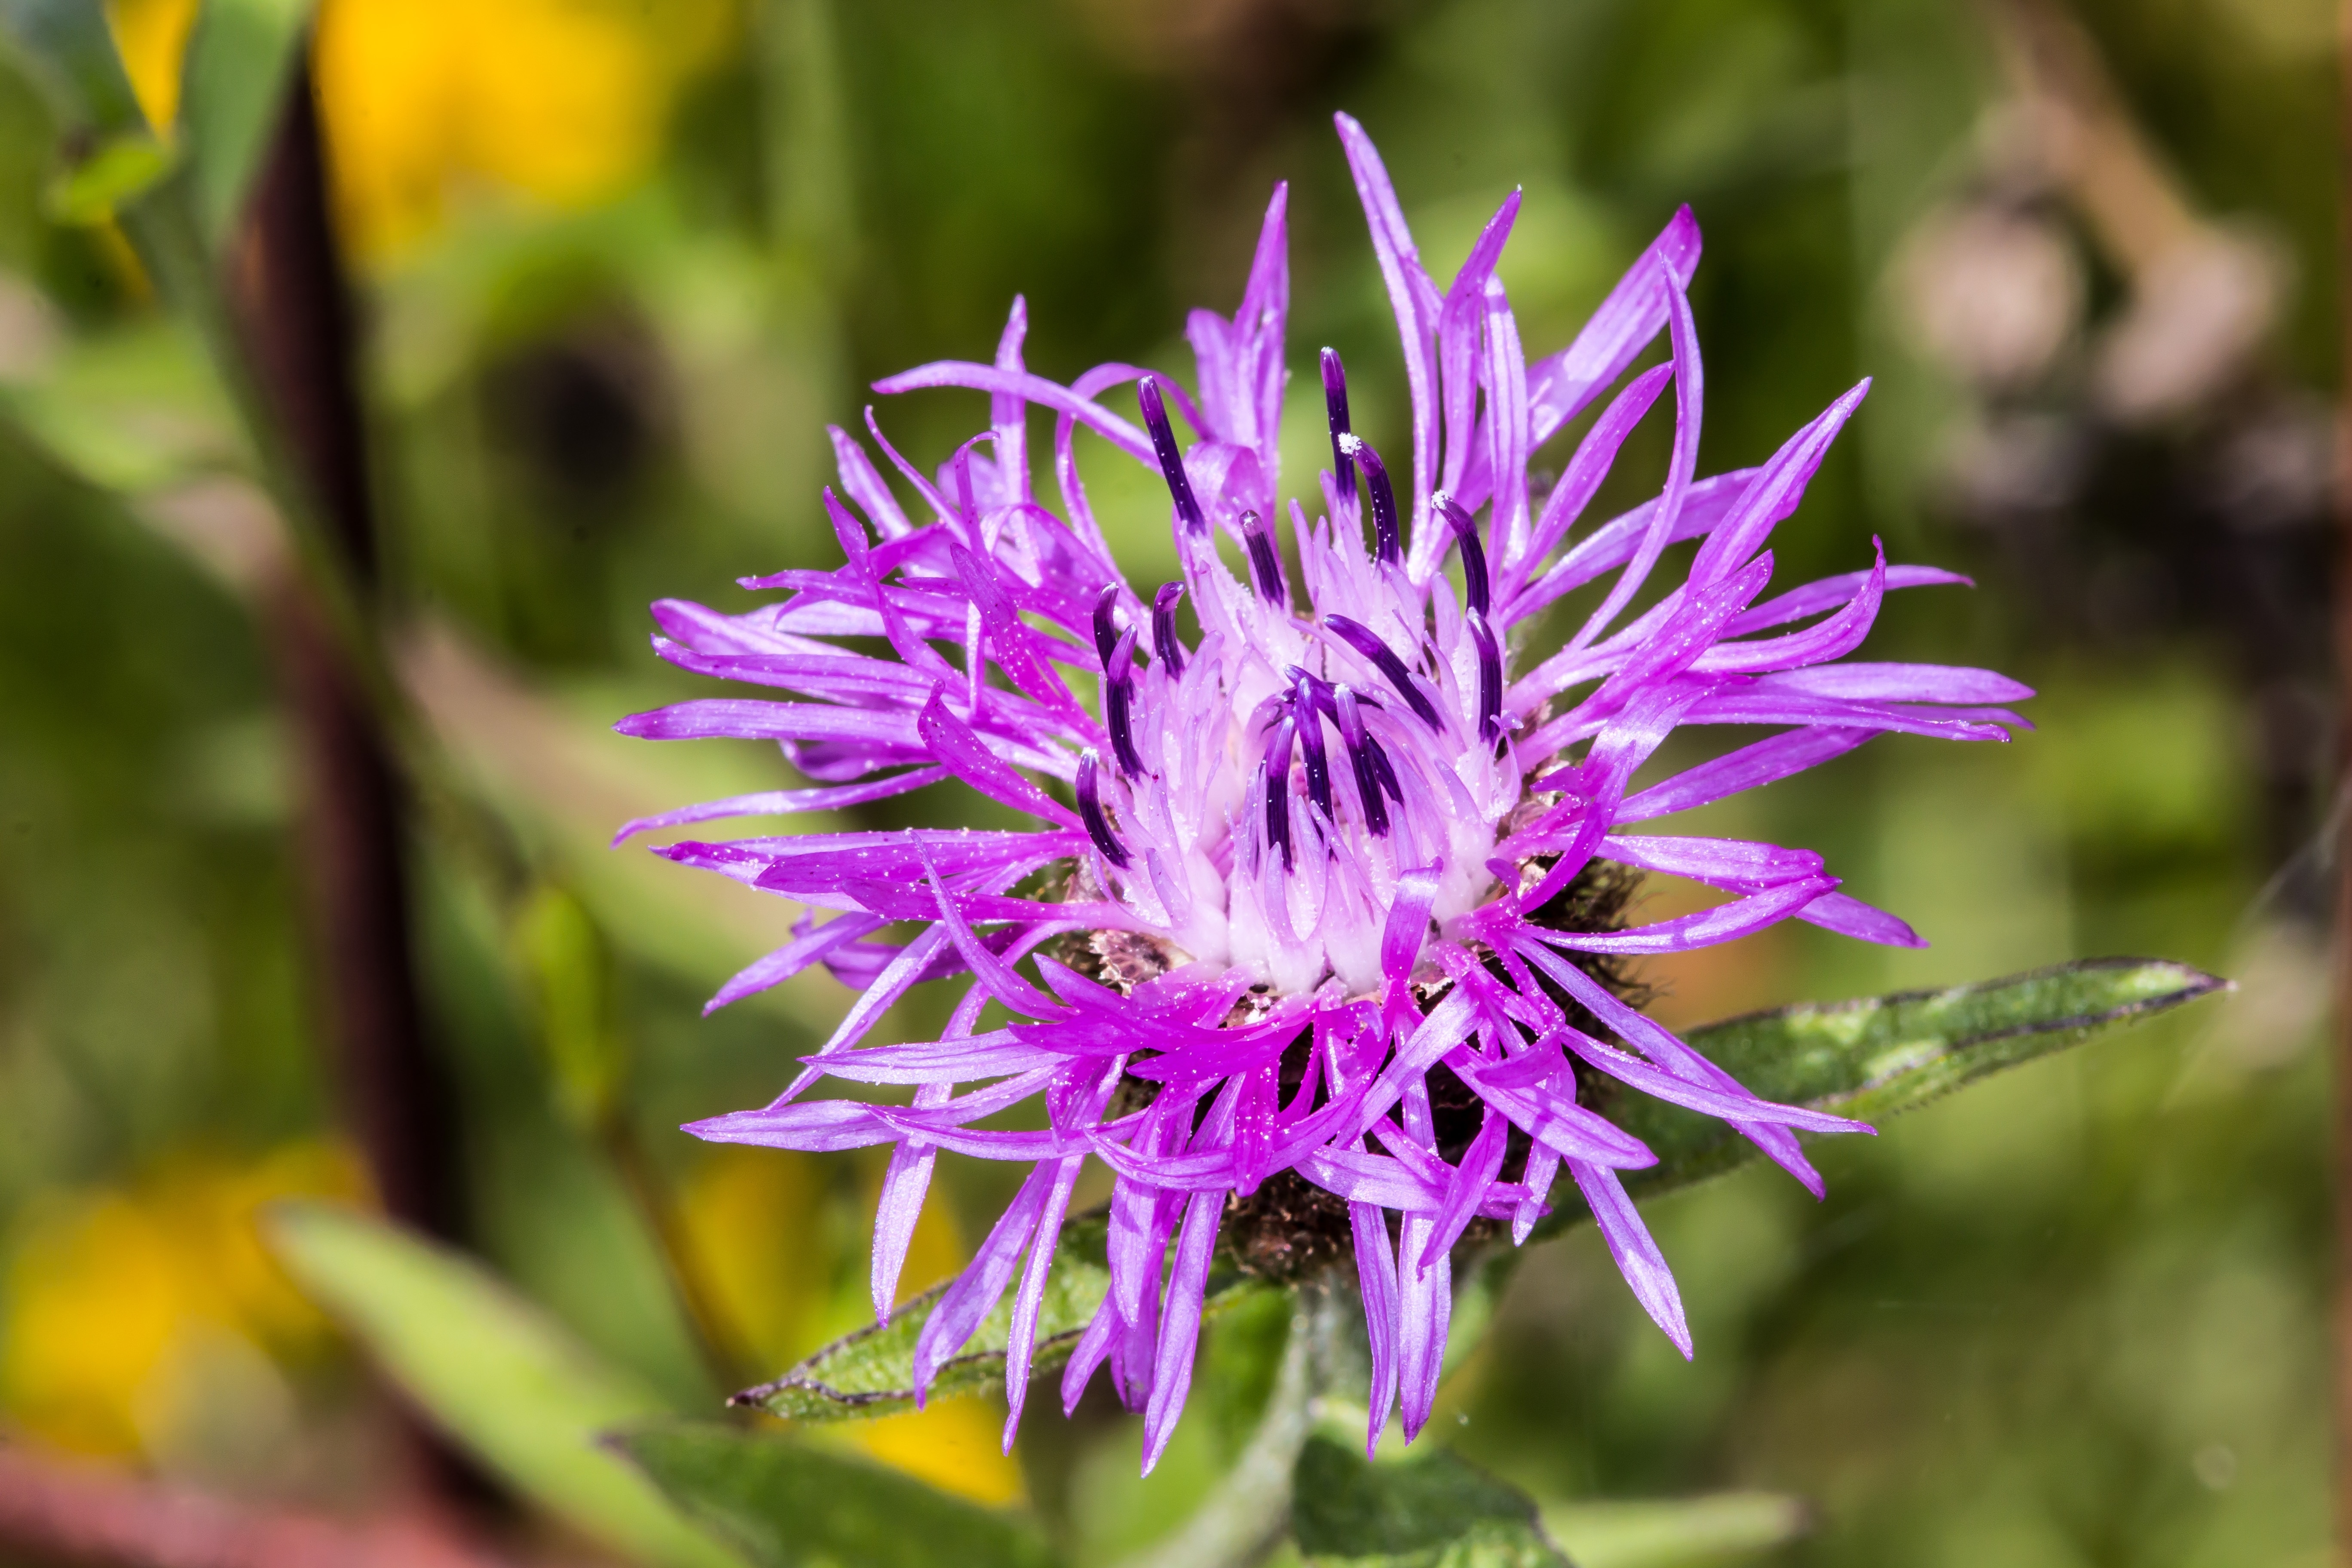 purple thistle flower